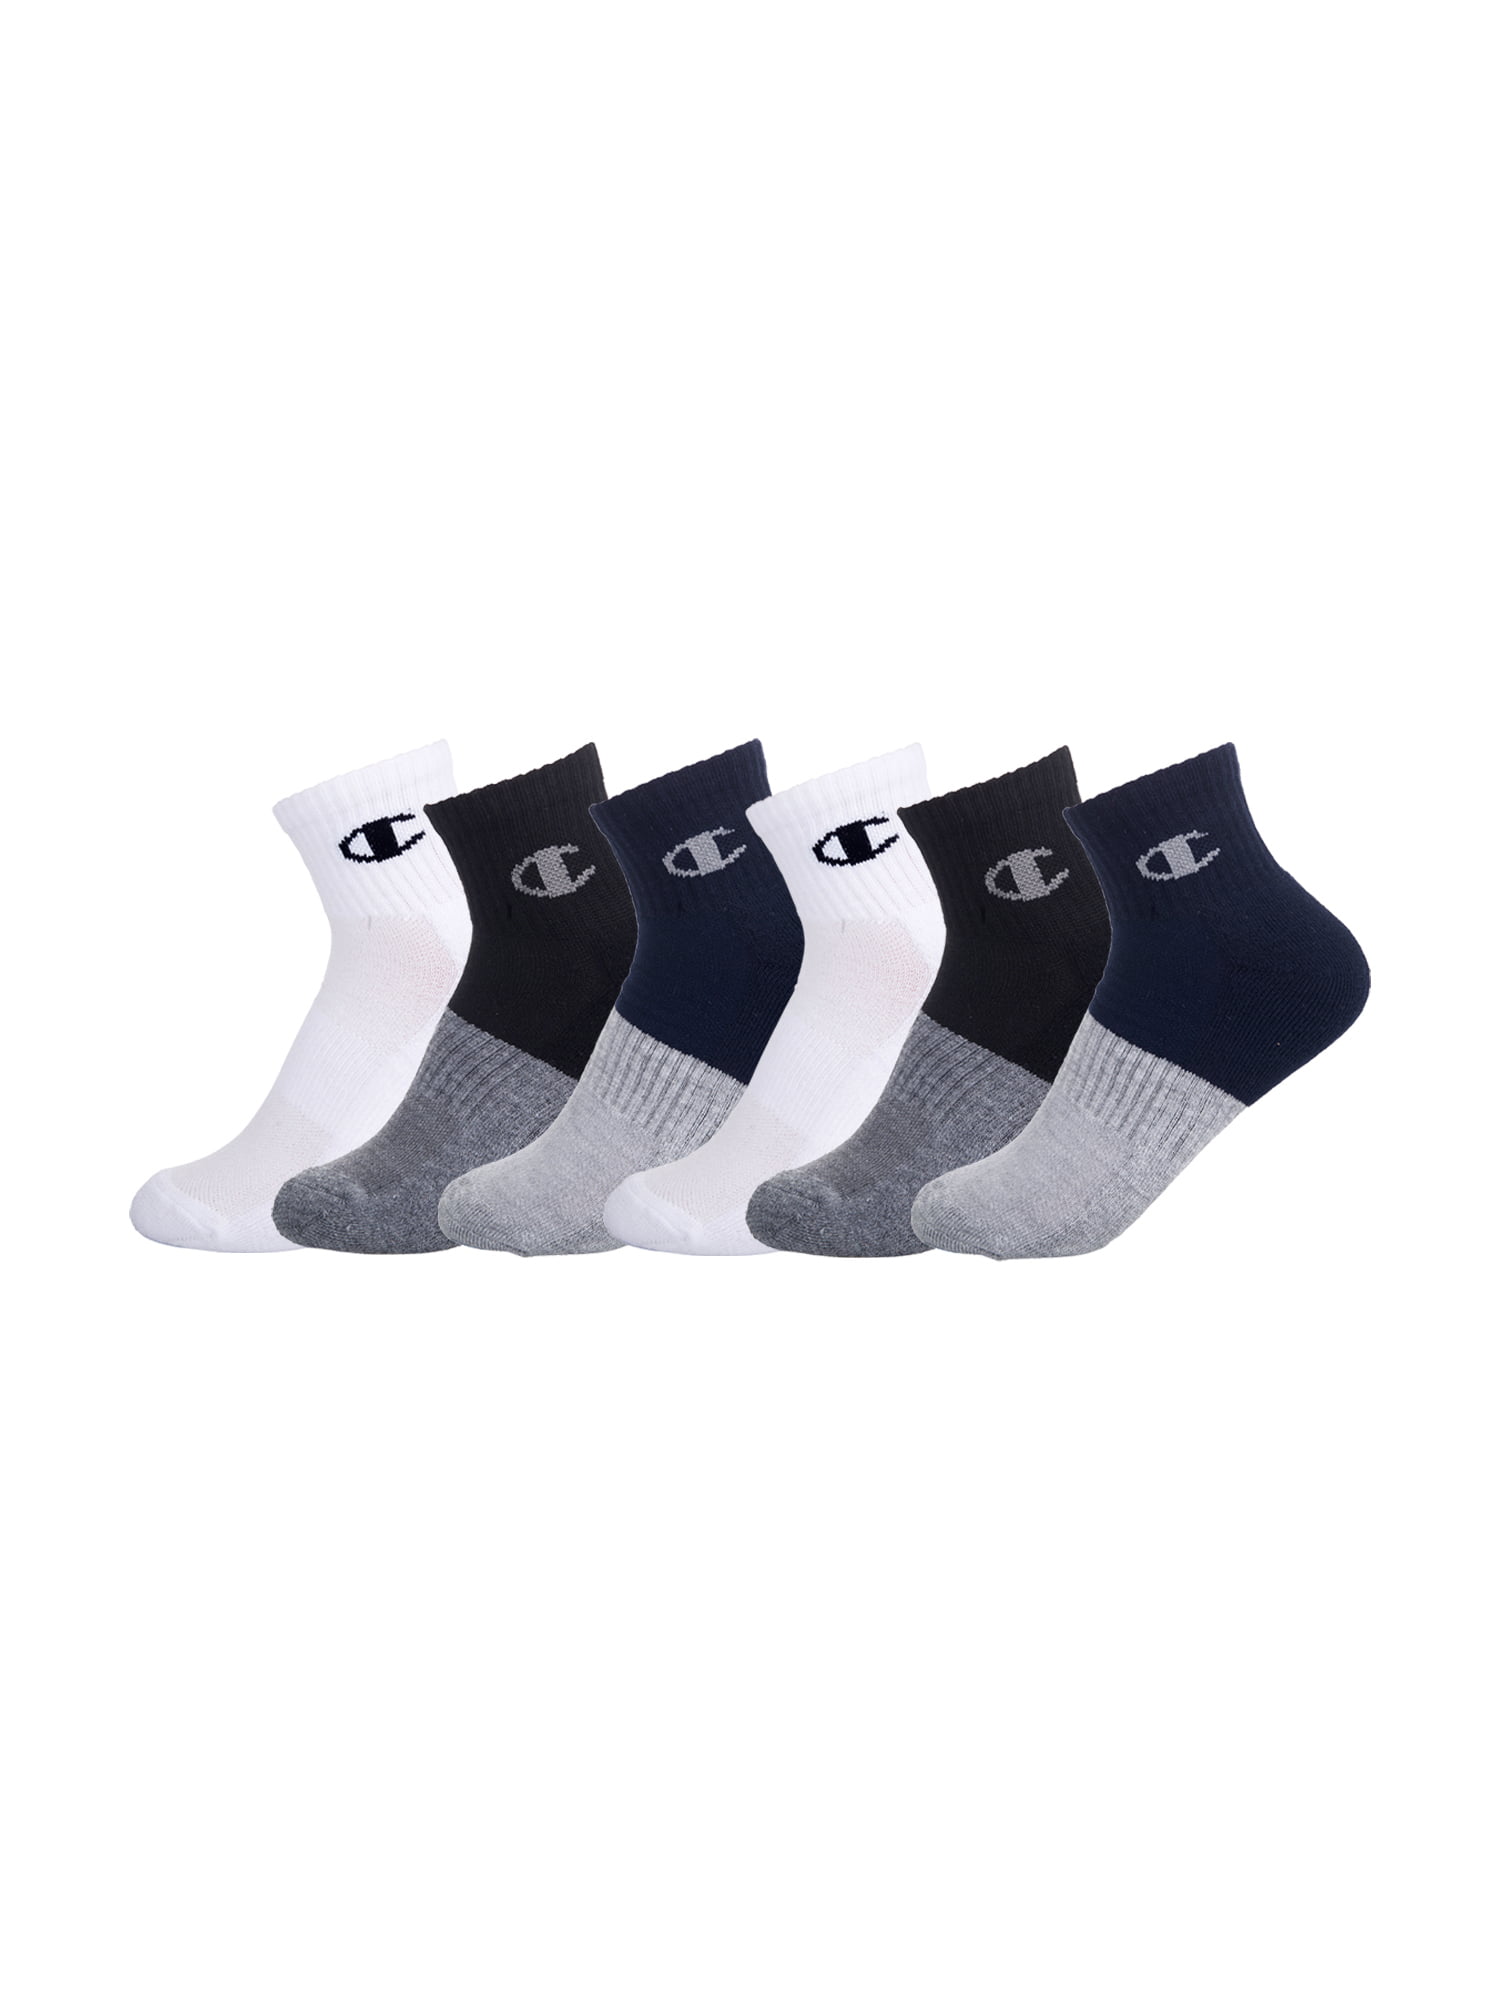 Champion - Champion Unisex Socks, 6 Pack Ankle Socks, Sizes 7 - 11 ...